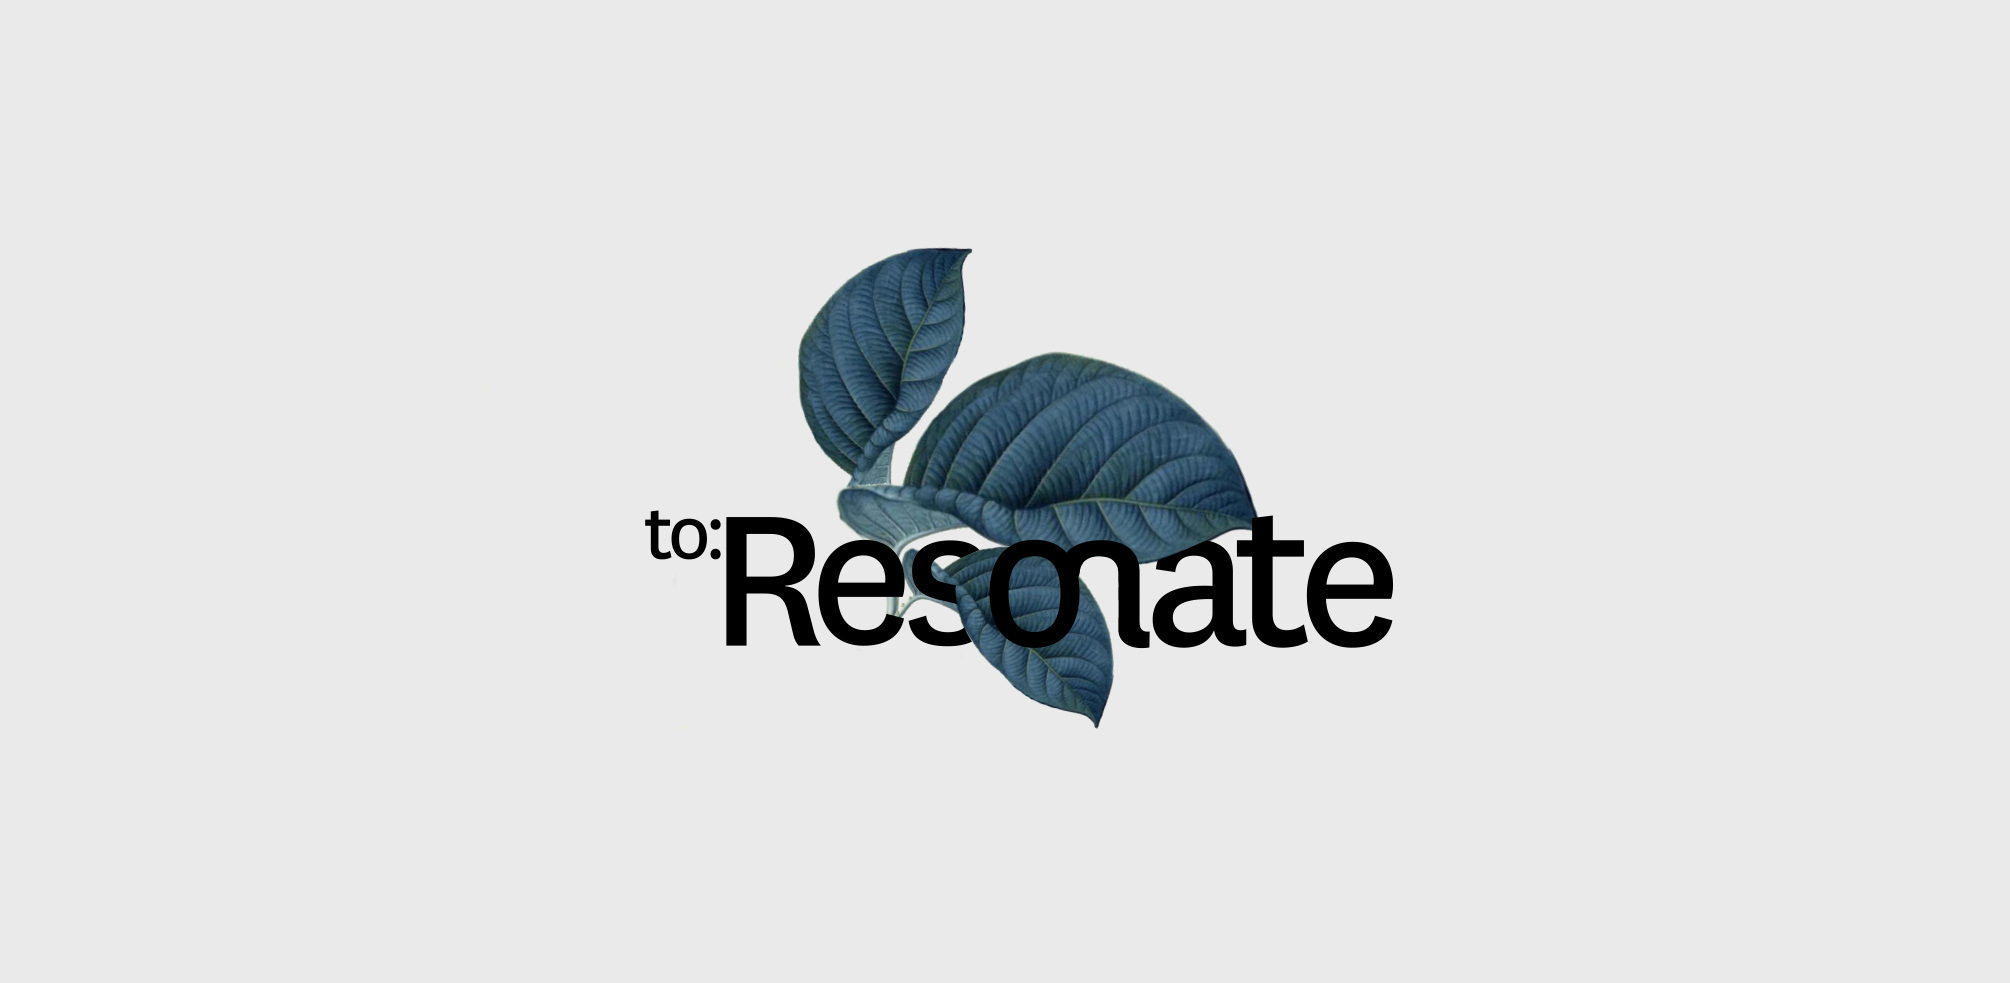 Logo Design to:Resonate